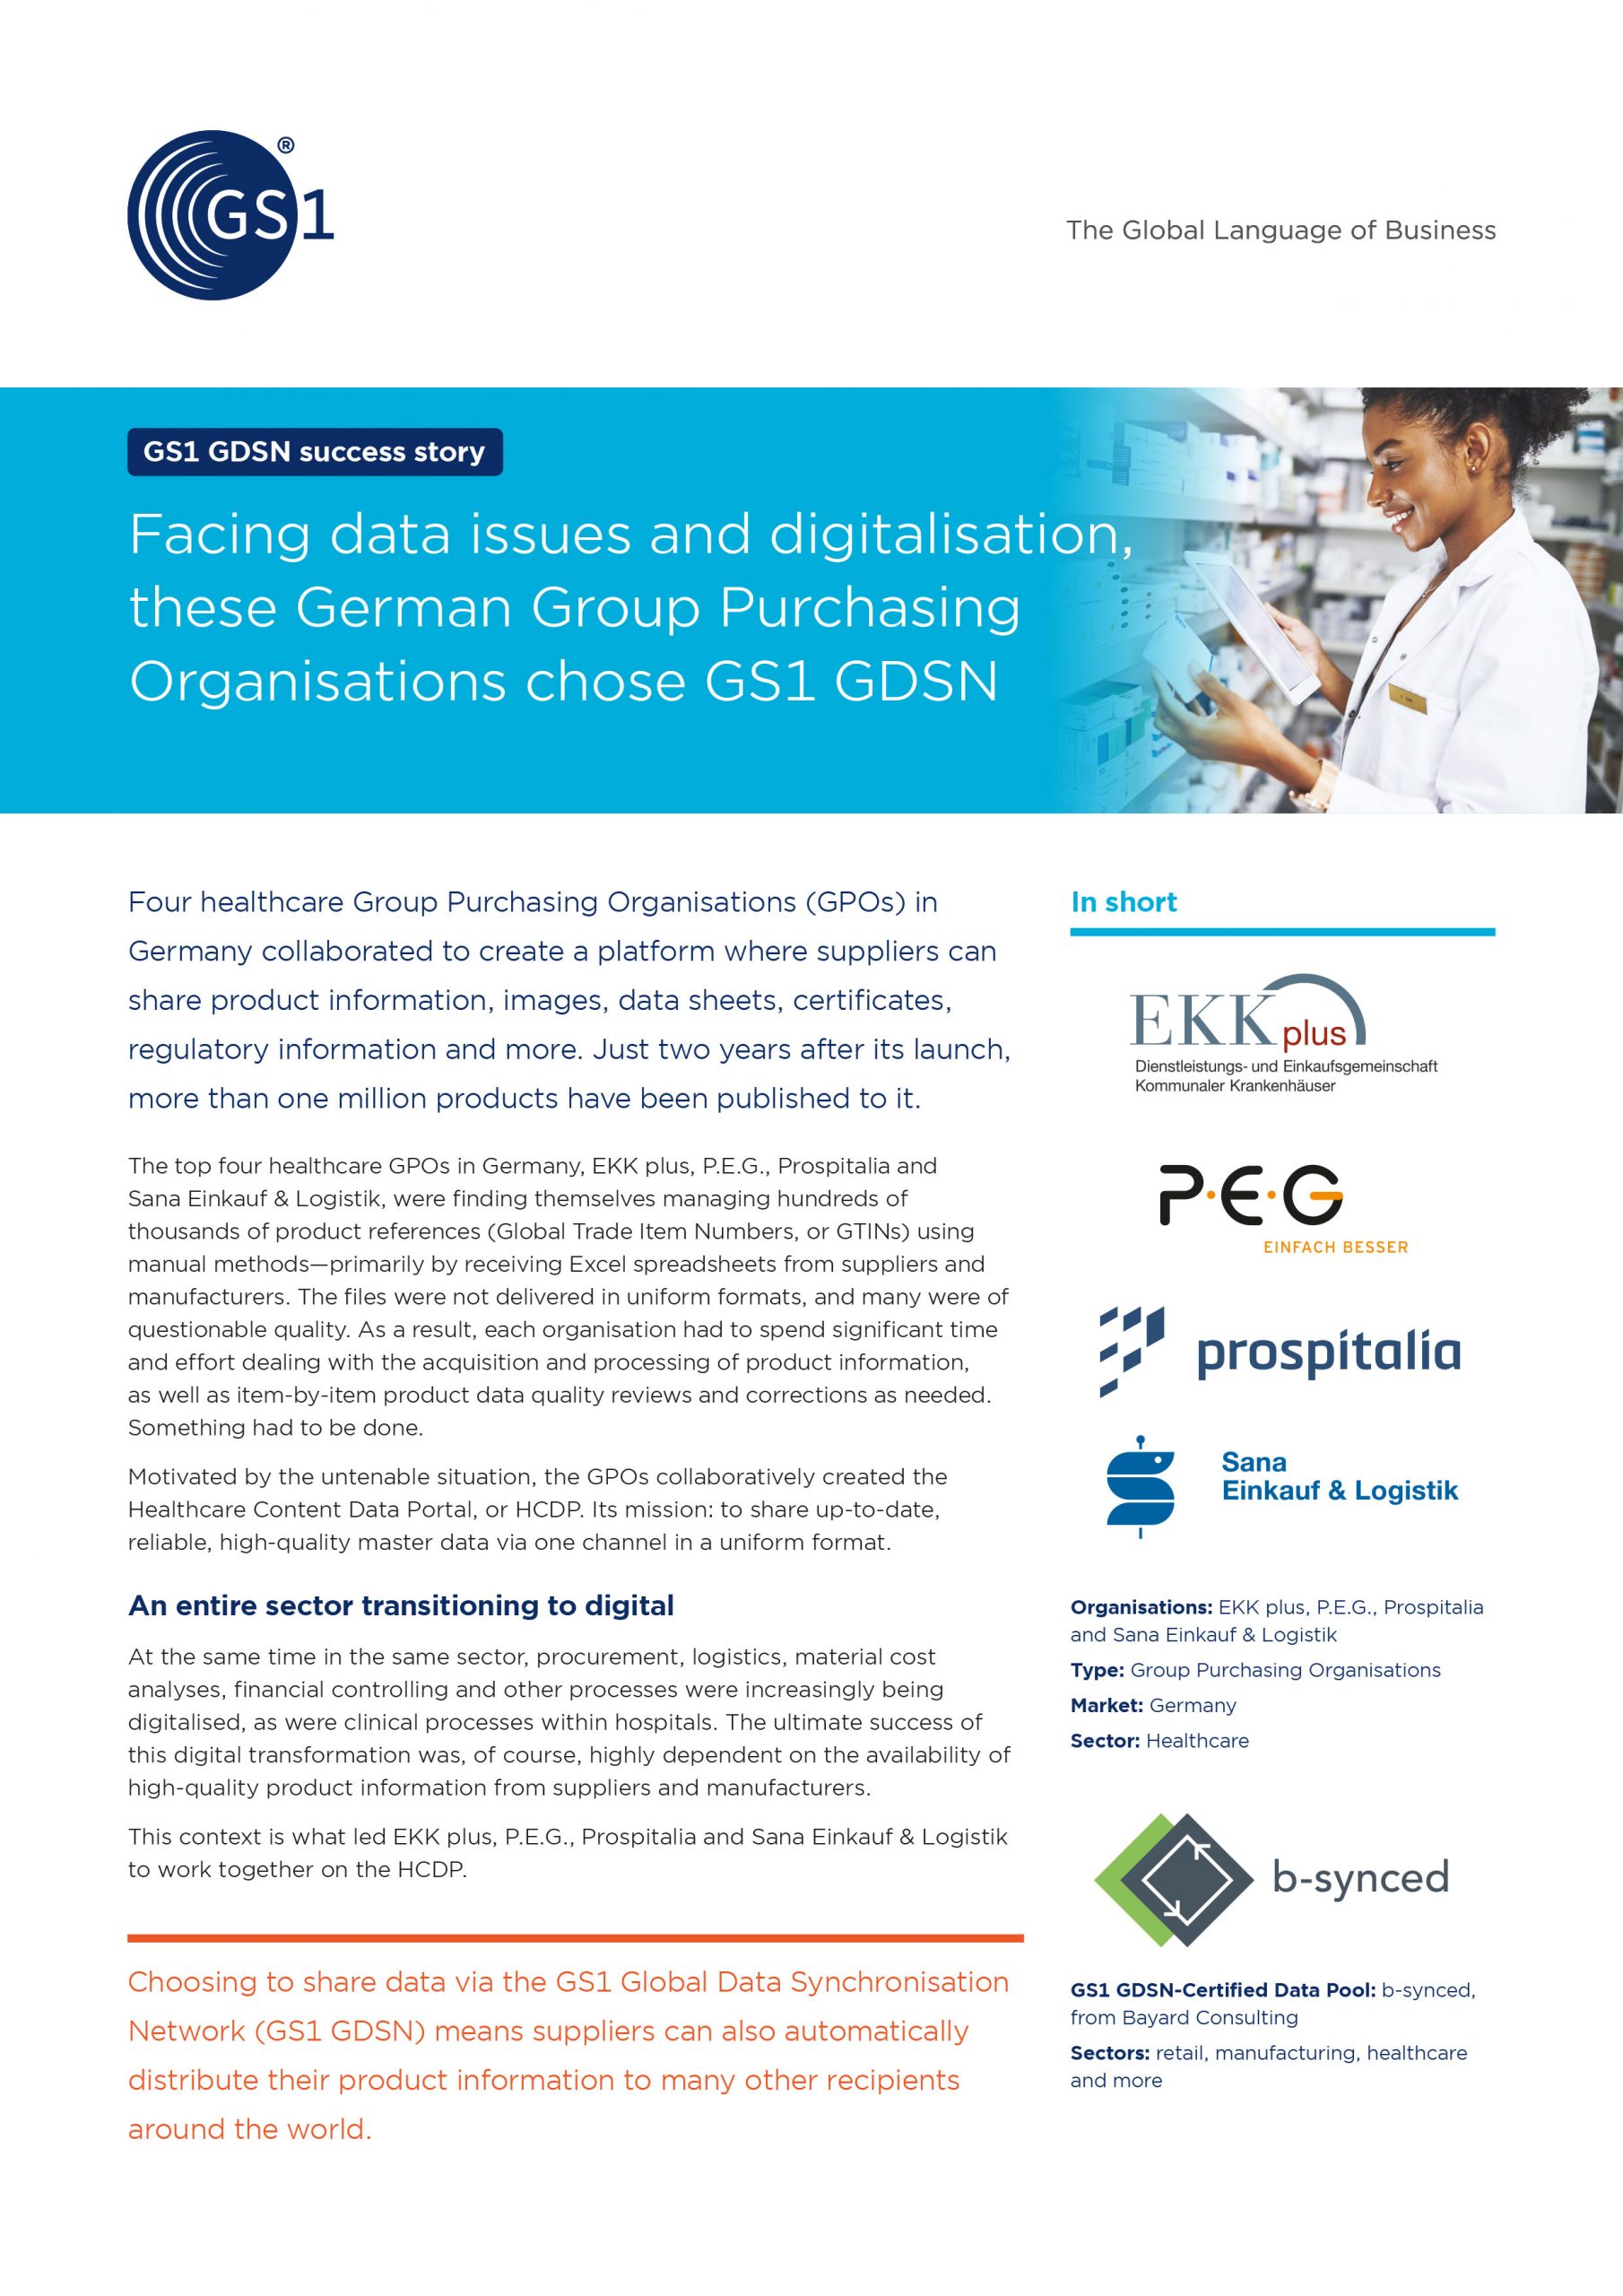 German GPOs chose GS1 GDSN to improve data quality